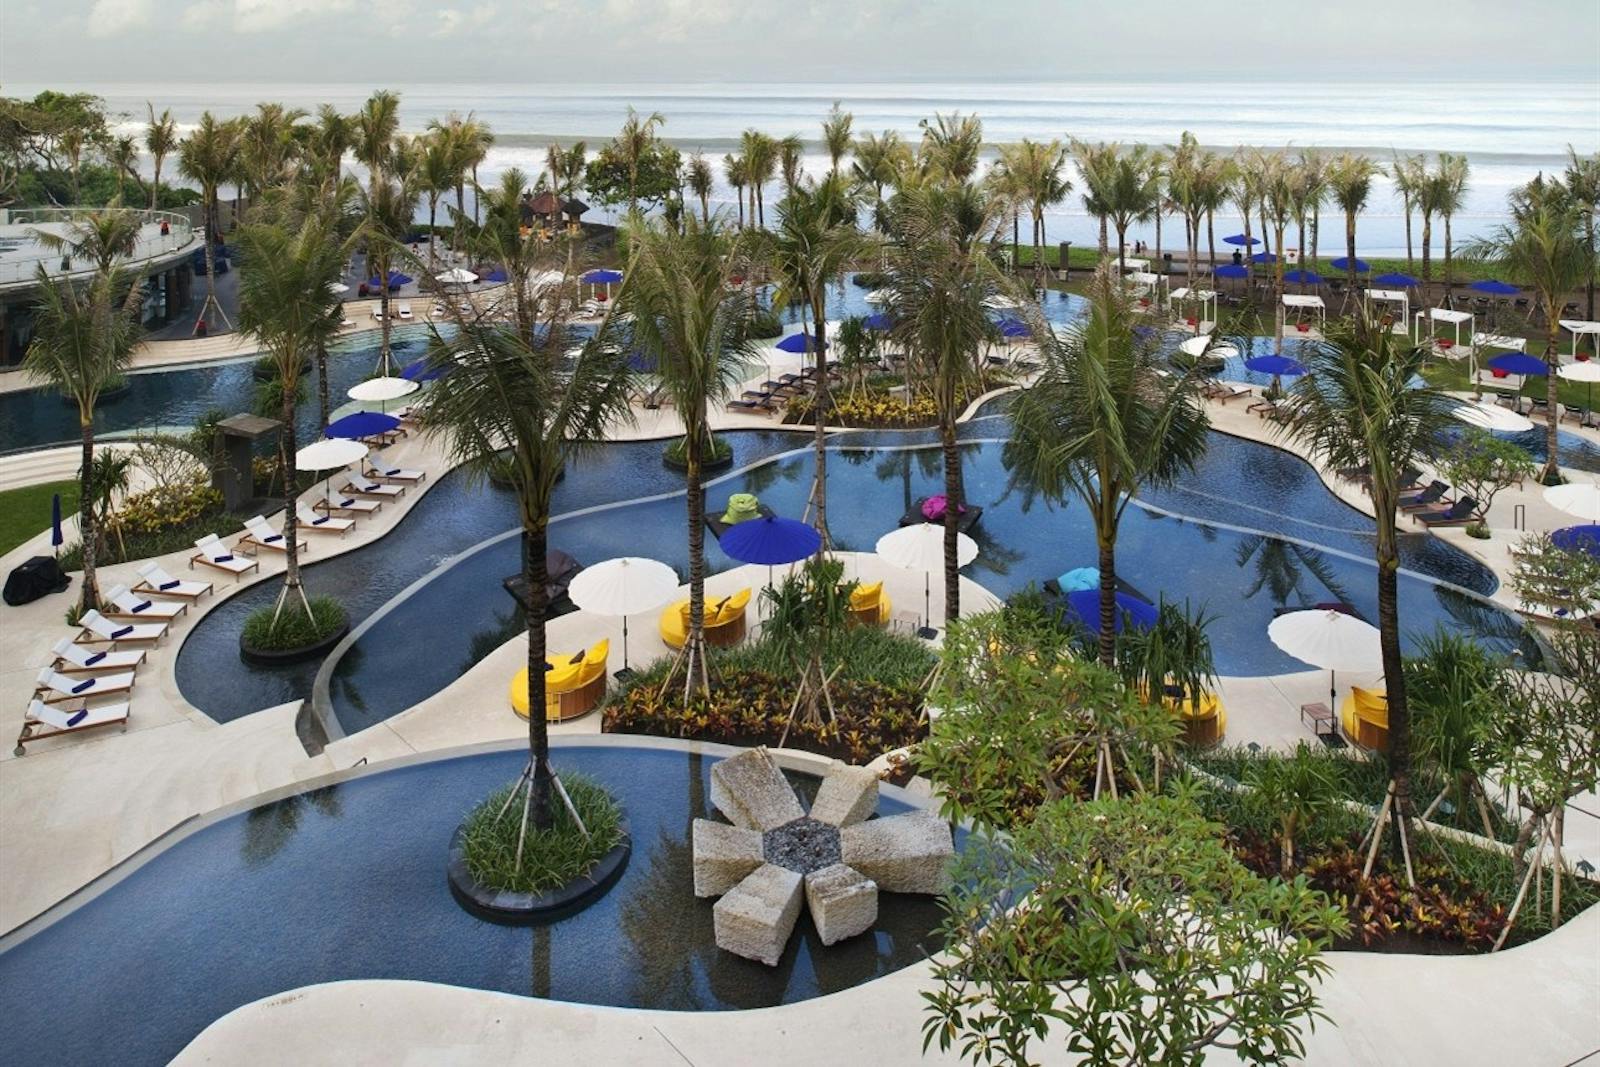 W Bali Seminyak Holidays - Luxury Seminyak Resort